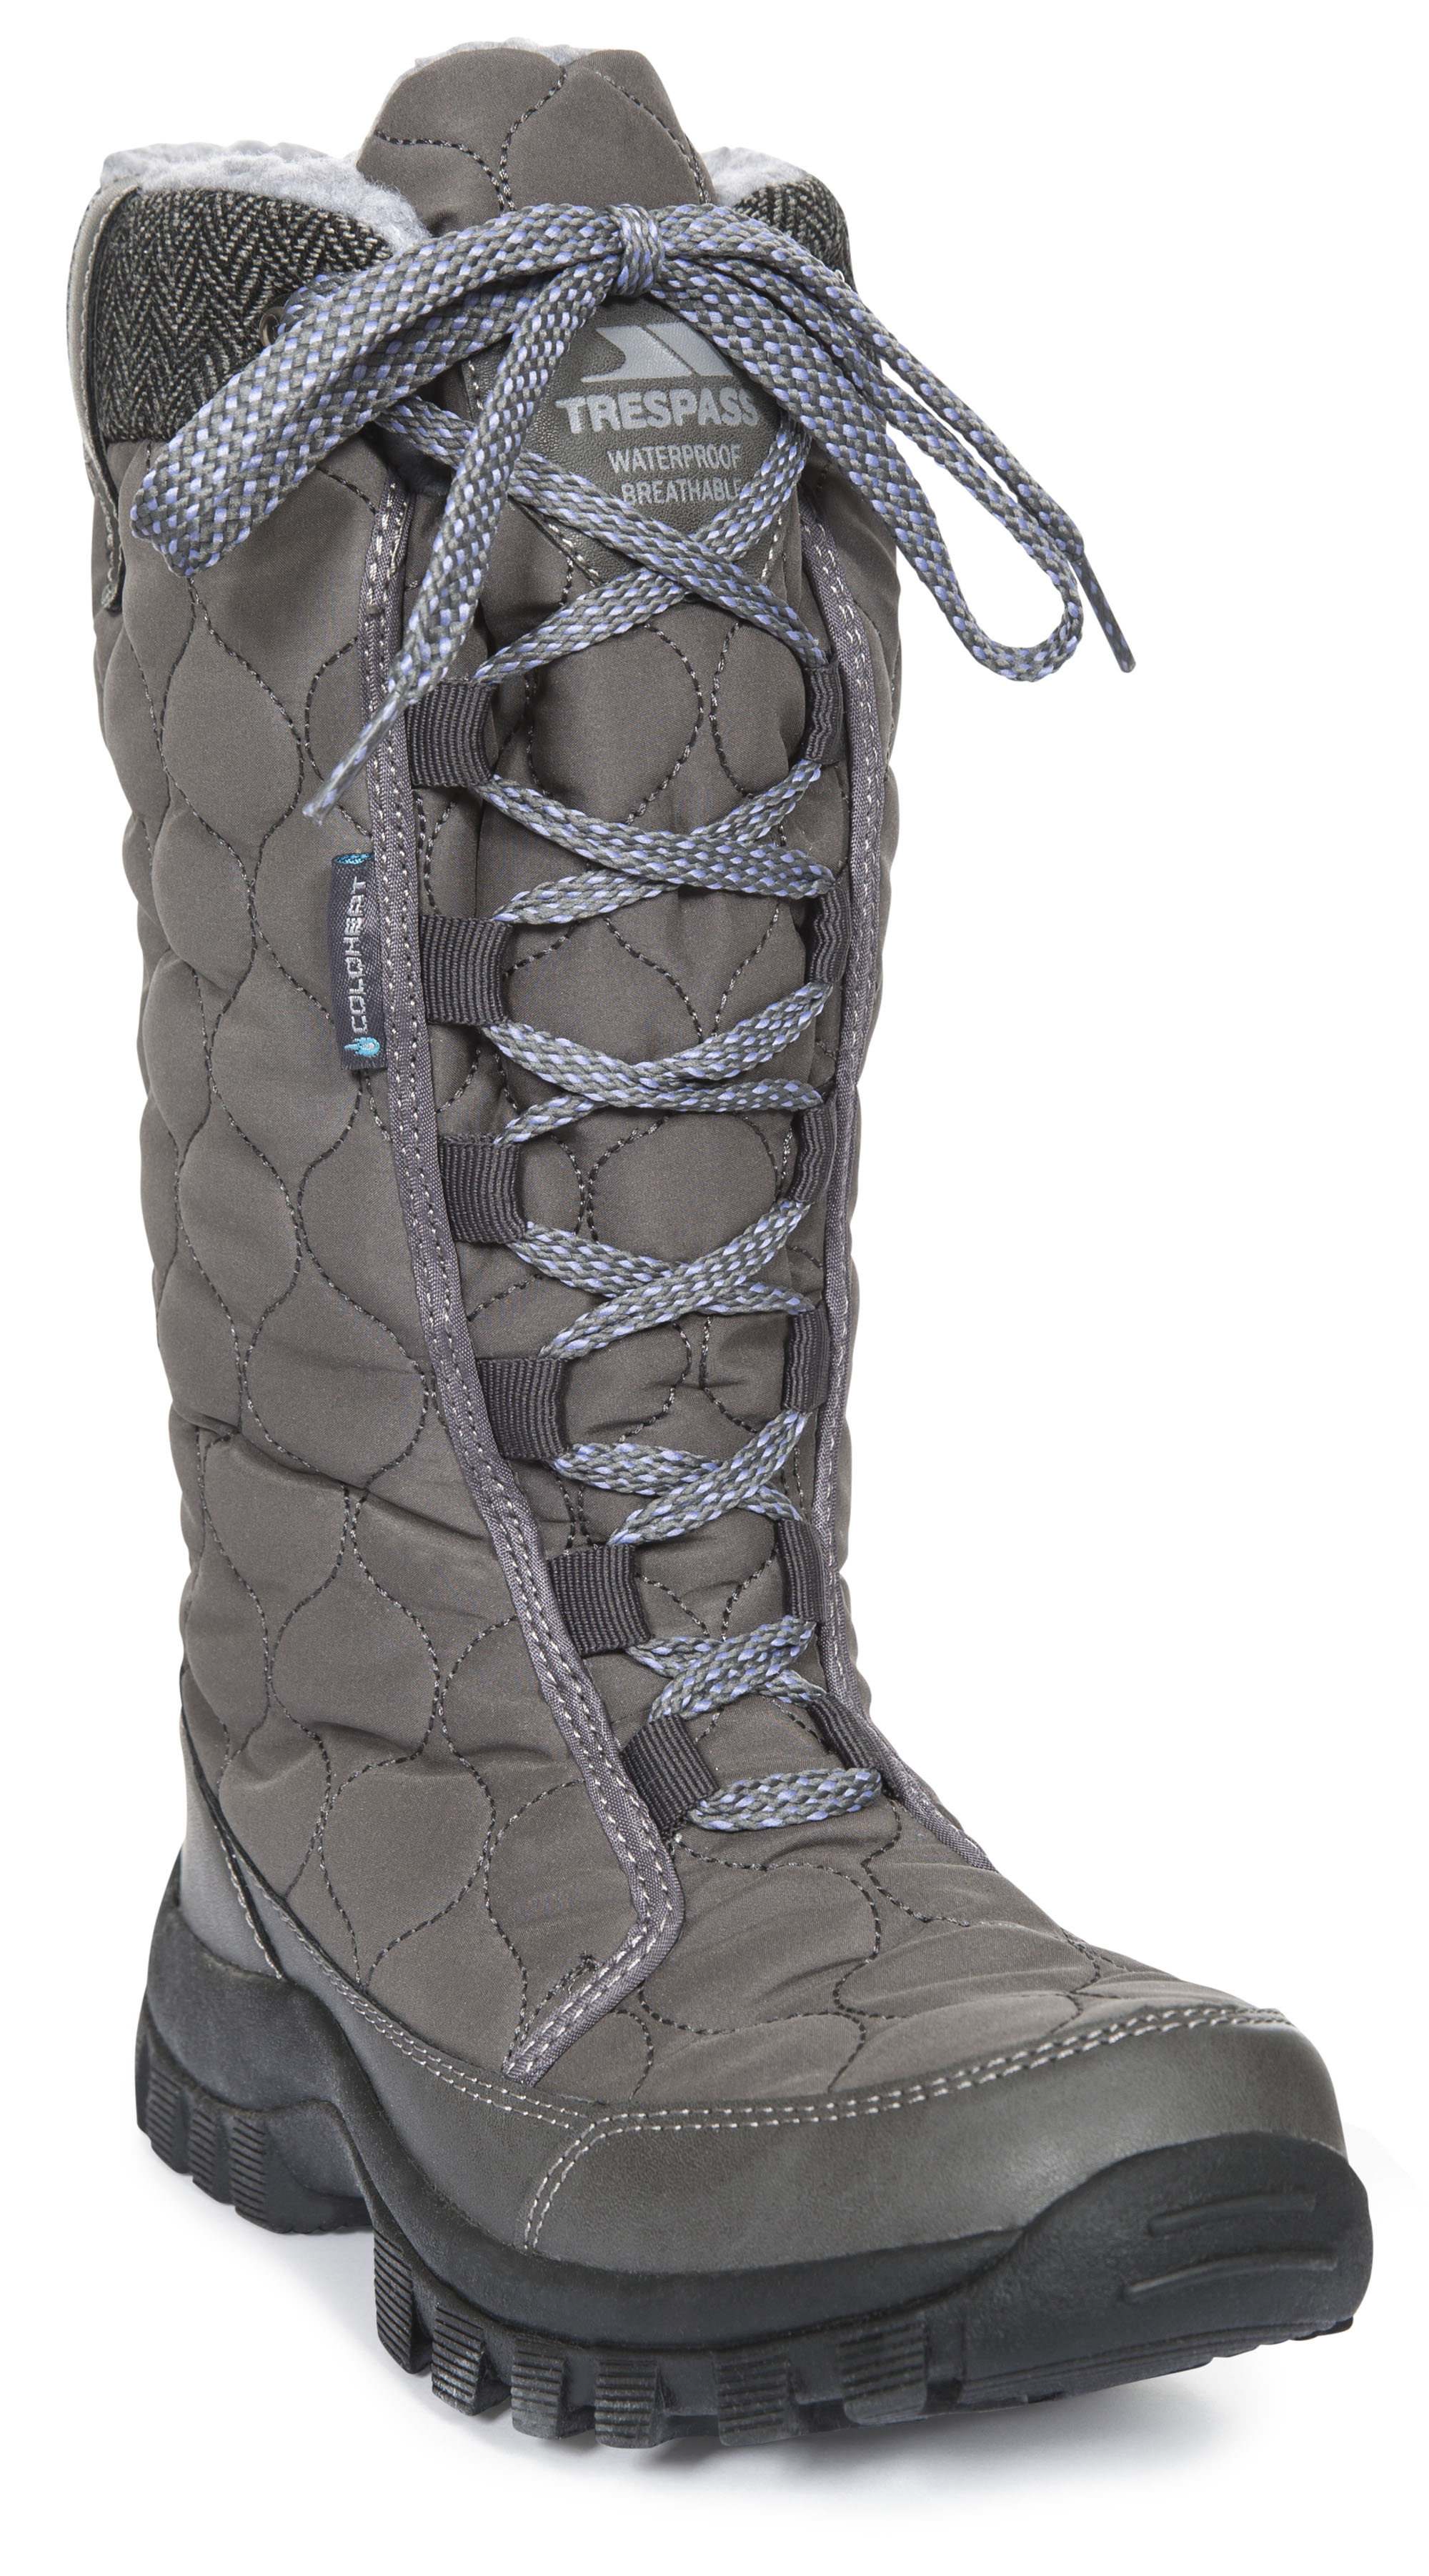 ceitidh women's snow boots